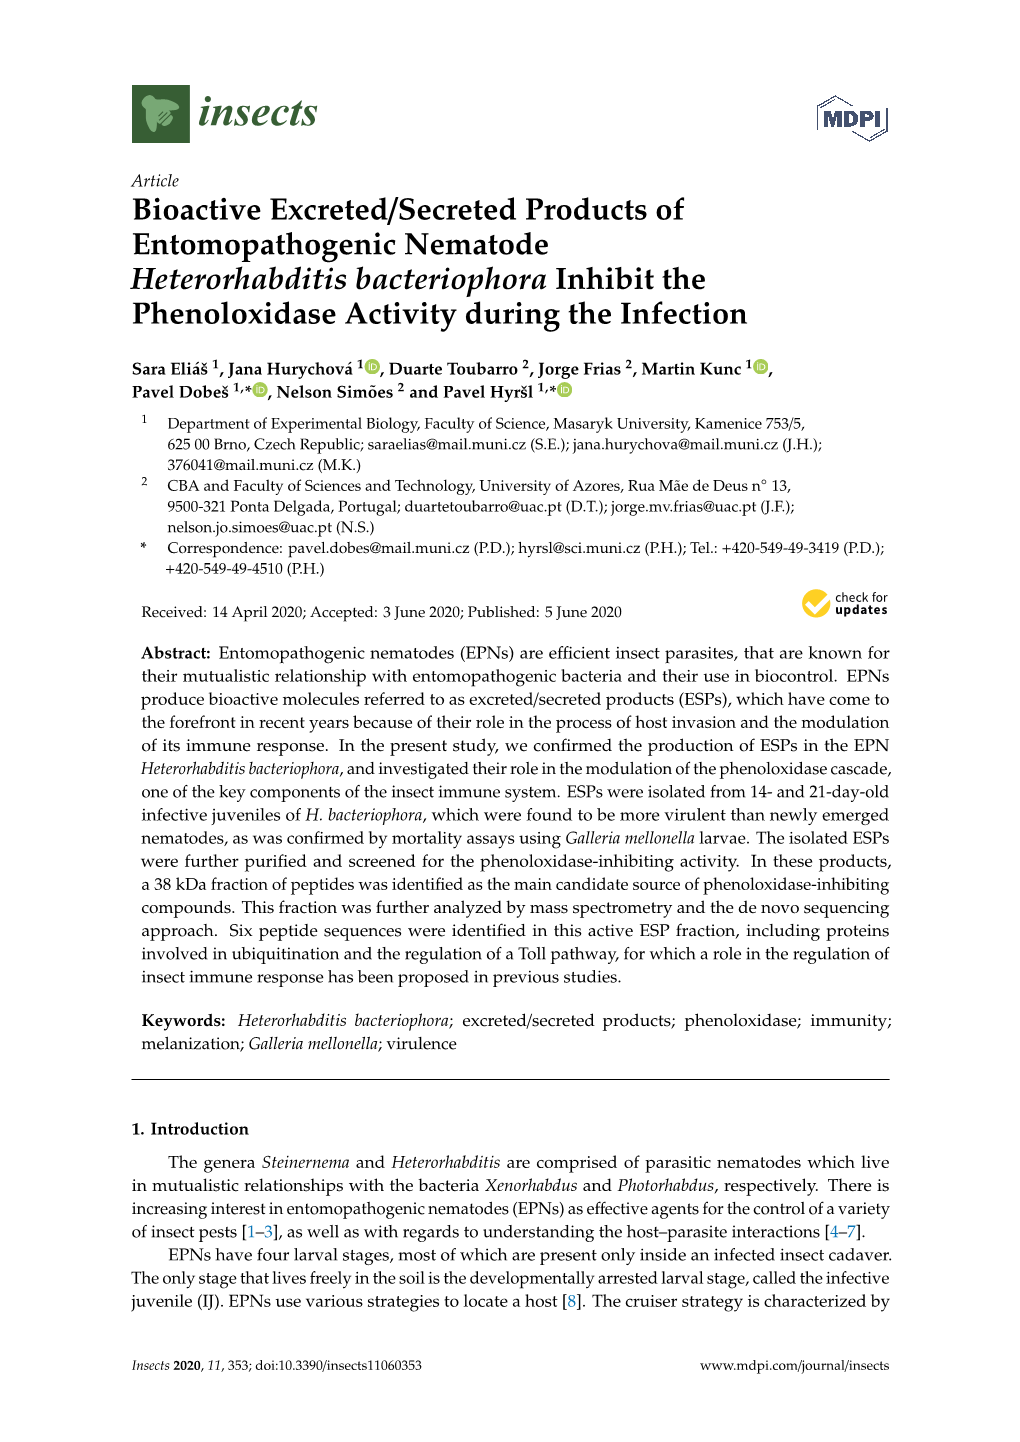 Bioactive Excreted/Secreted Products of Entomopathogenic Nematode Heterorhabditis Bacteriophora Inhibit the Phenoloxidase Activity During the Infection